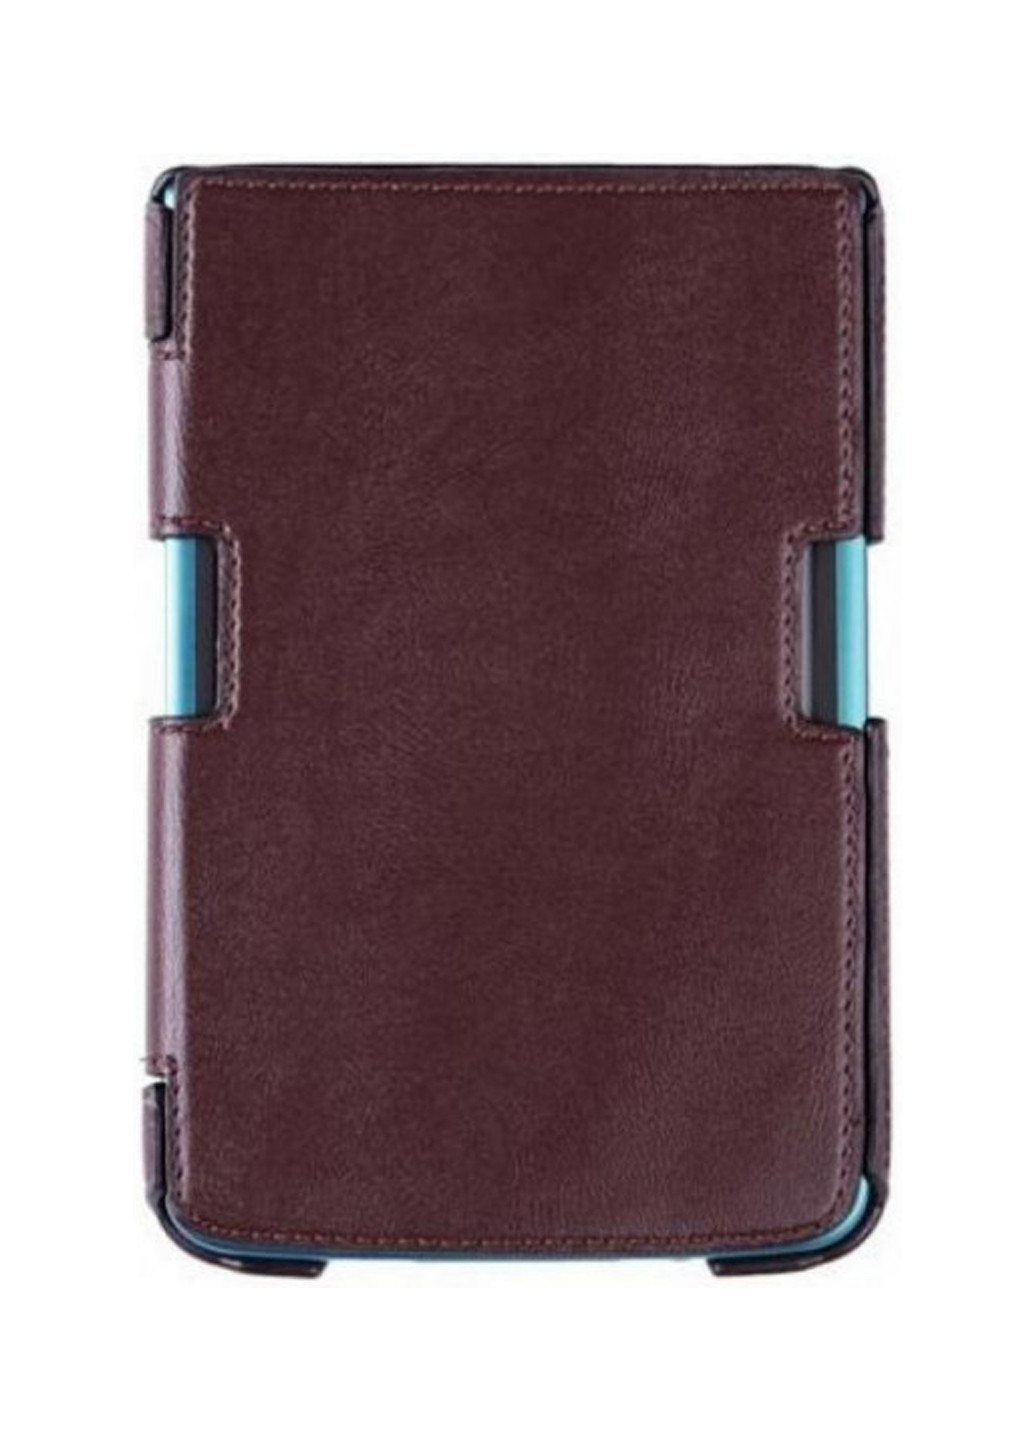 Чехол Premium для PocketBook 650 brown (4821784622002) Airon premium для электронной книги pocketbook 650 brown (4821784622002) (158554744)